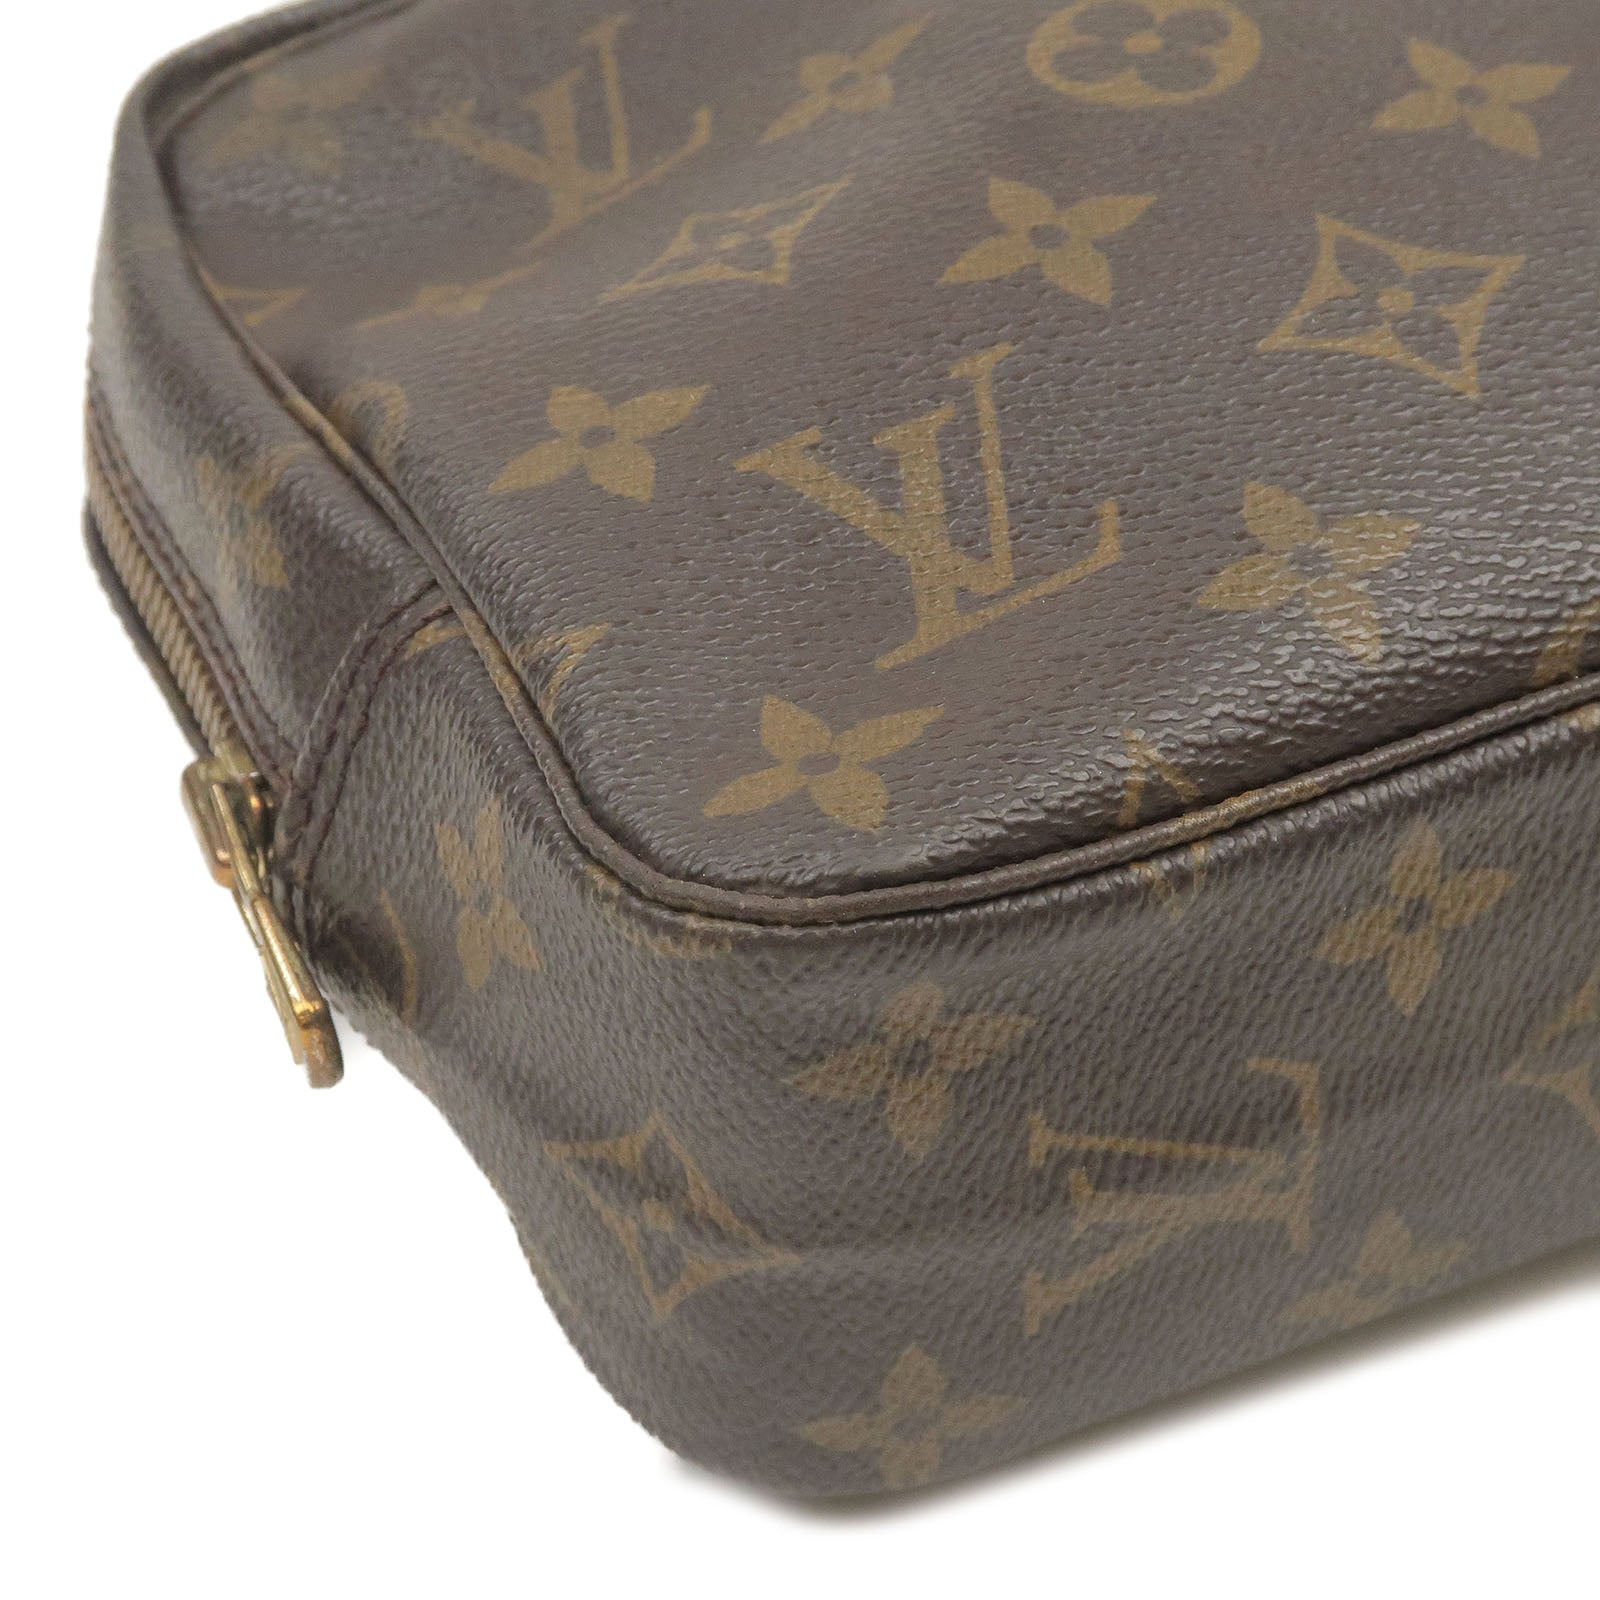 Louis Vuitton Pre-Loved Trousse Pochette bag for Women - Brown in Kuwait